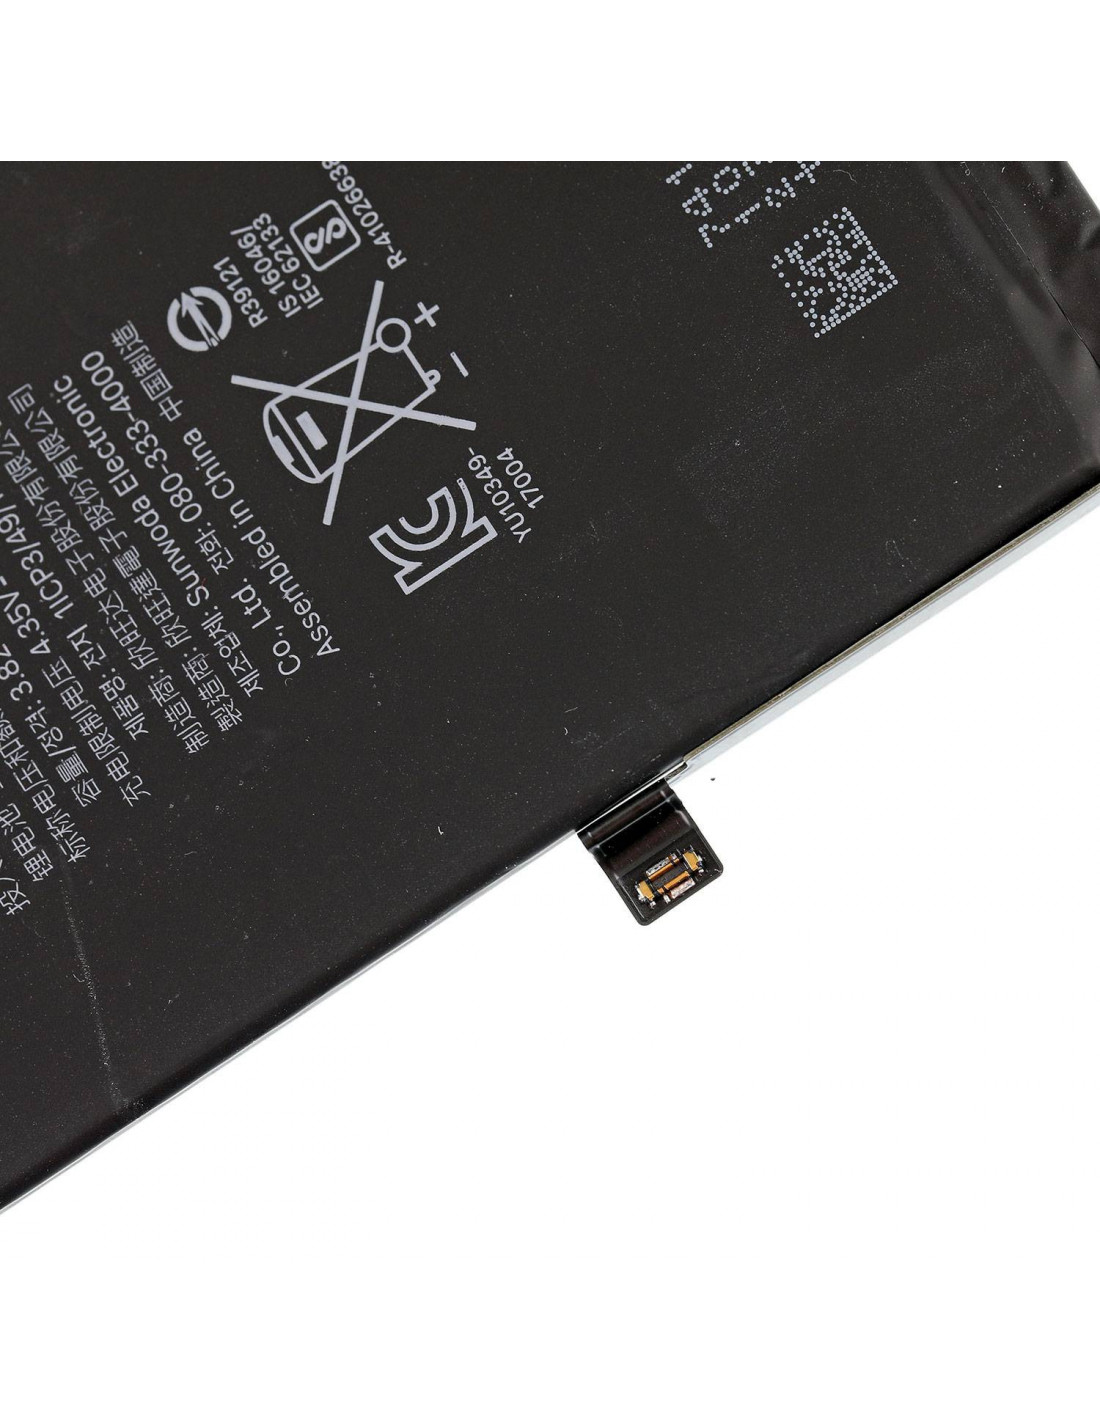 Batería Original para Apple iPhone 8 Plus